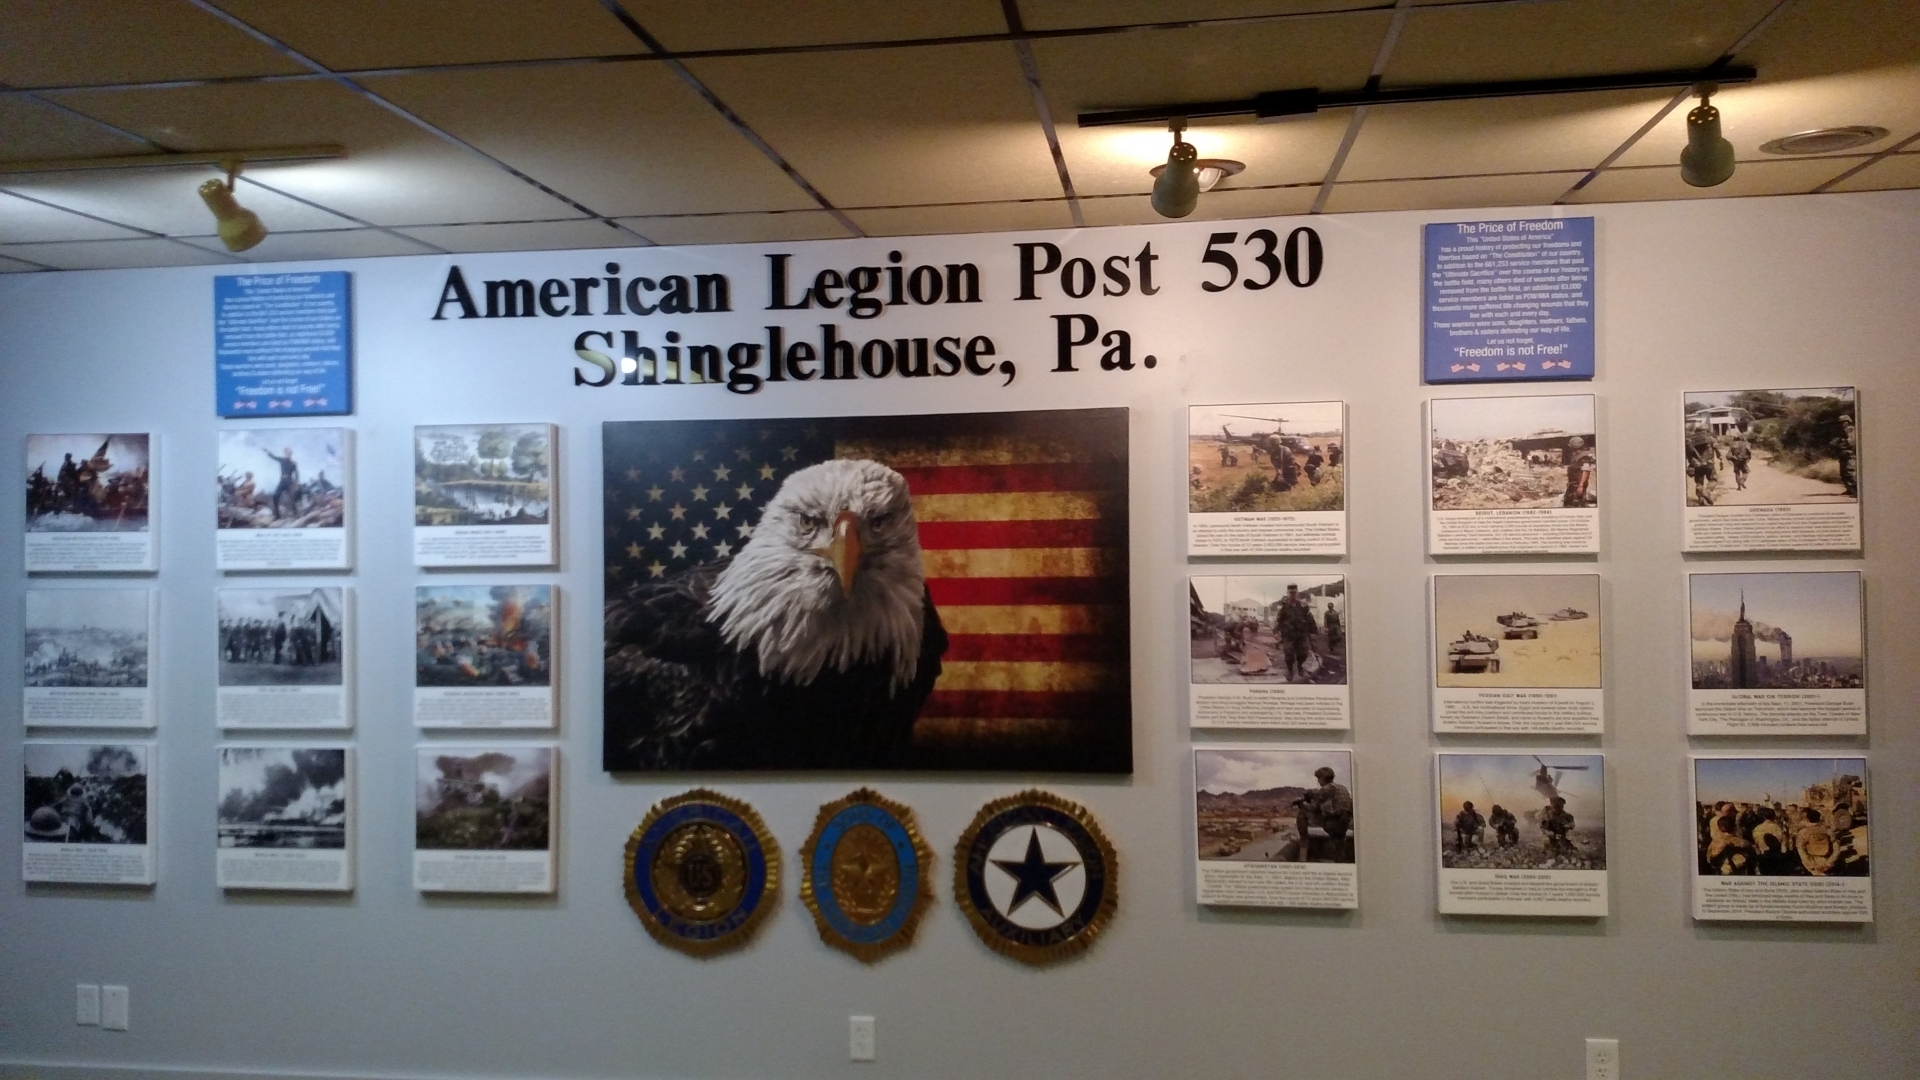 Post 530 Shinglehouse, Pennsylvania